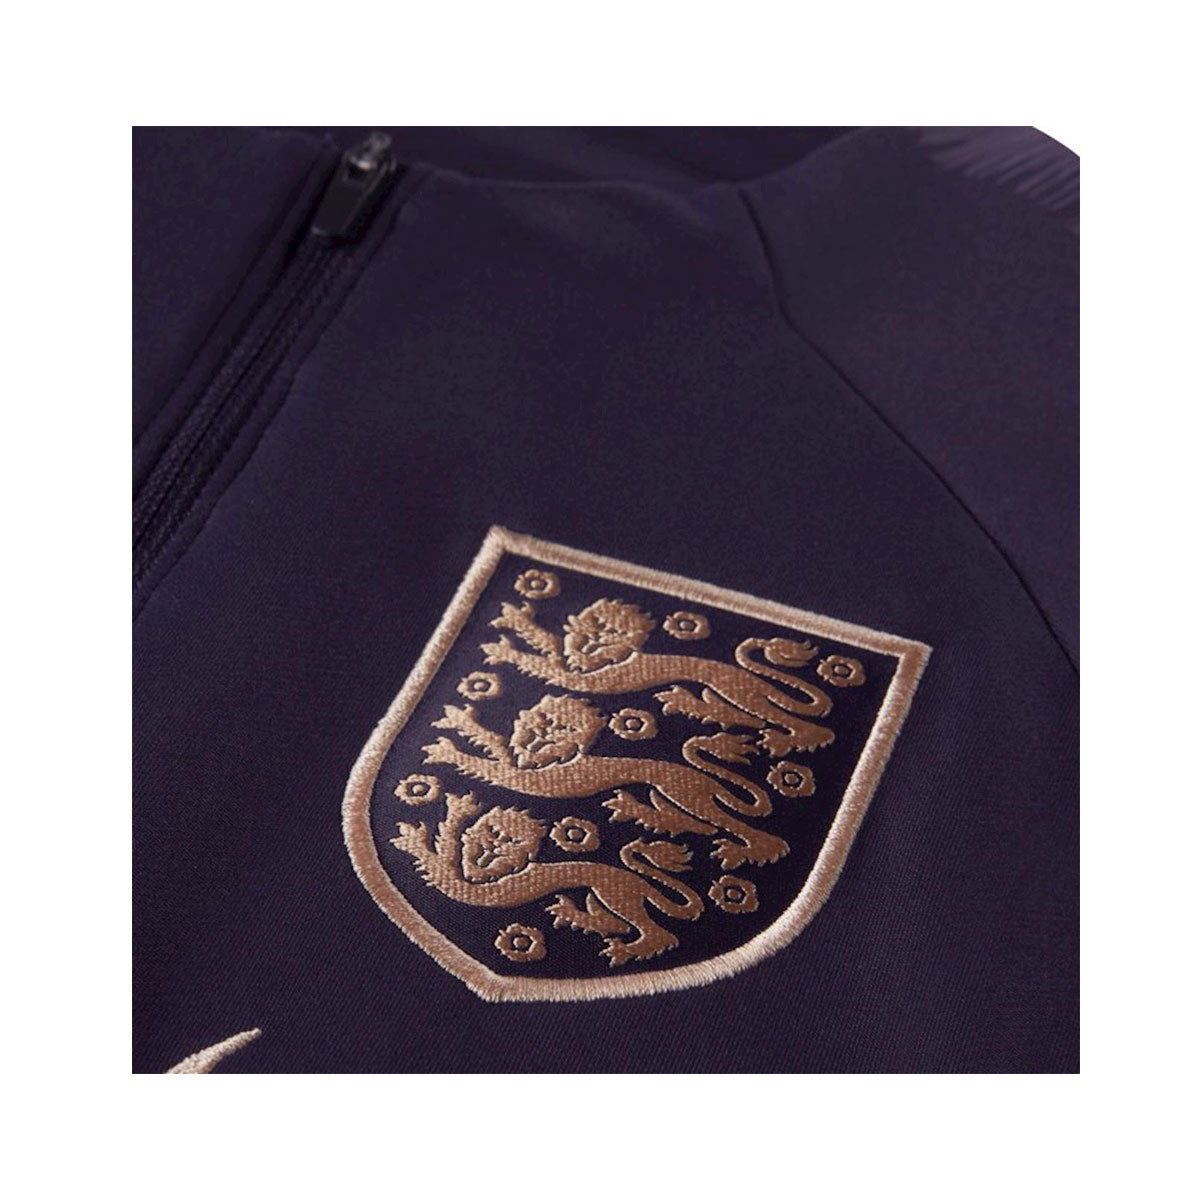 Nike Women's World Cup England 2019 Top